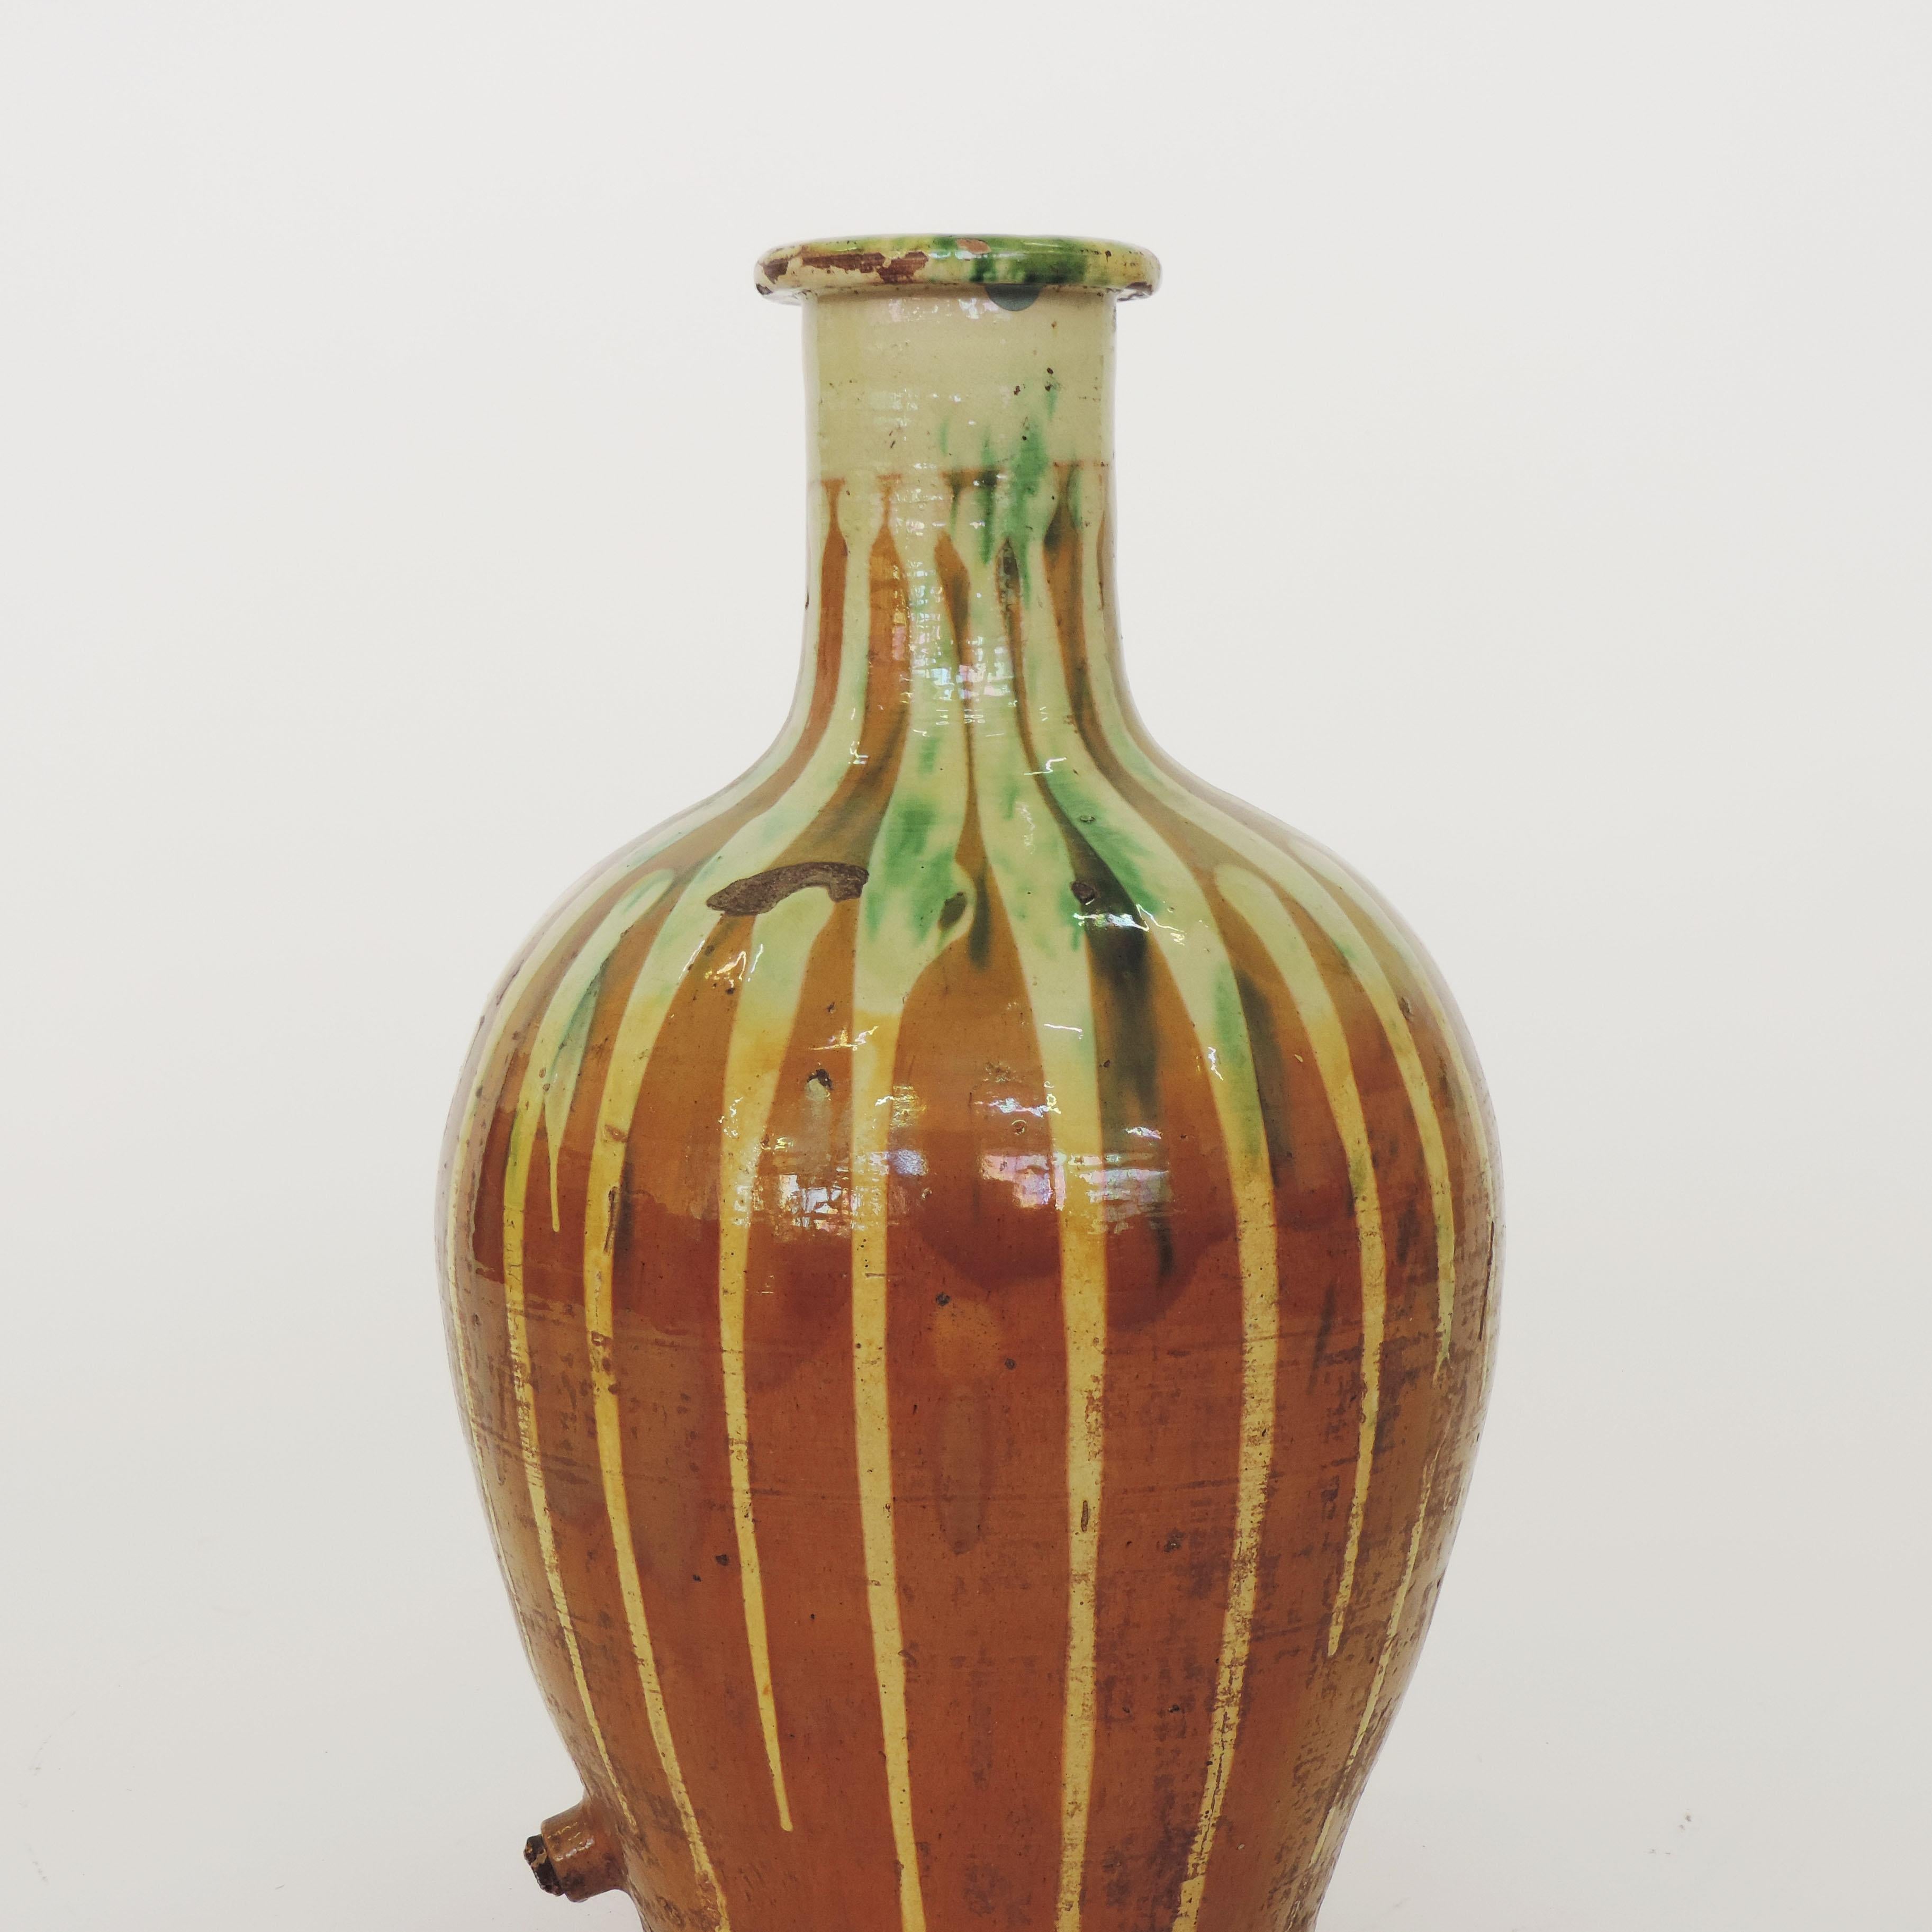 Antique glazed terracotta jar, Italy, 1900s.